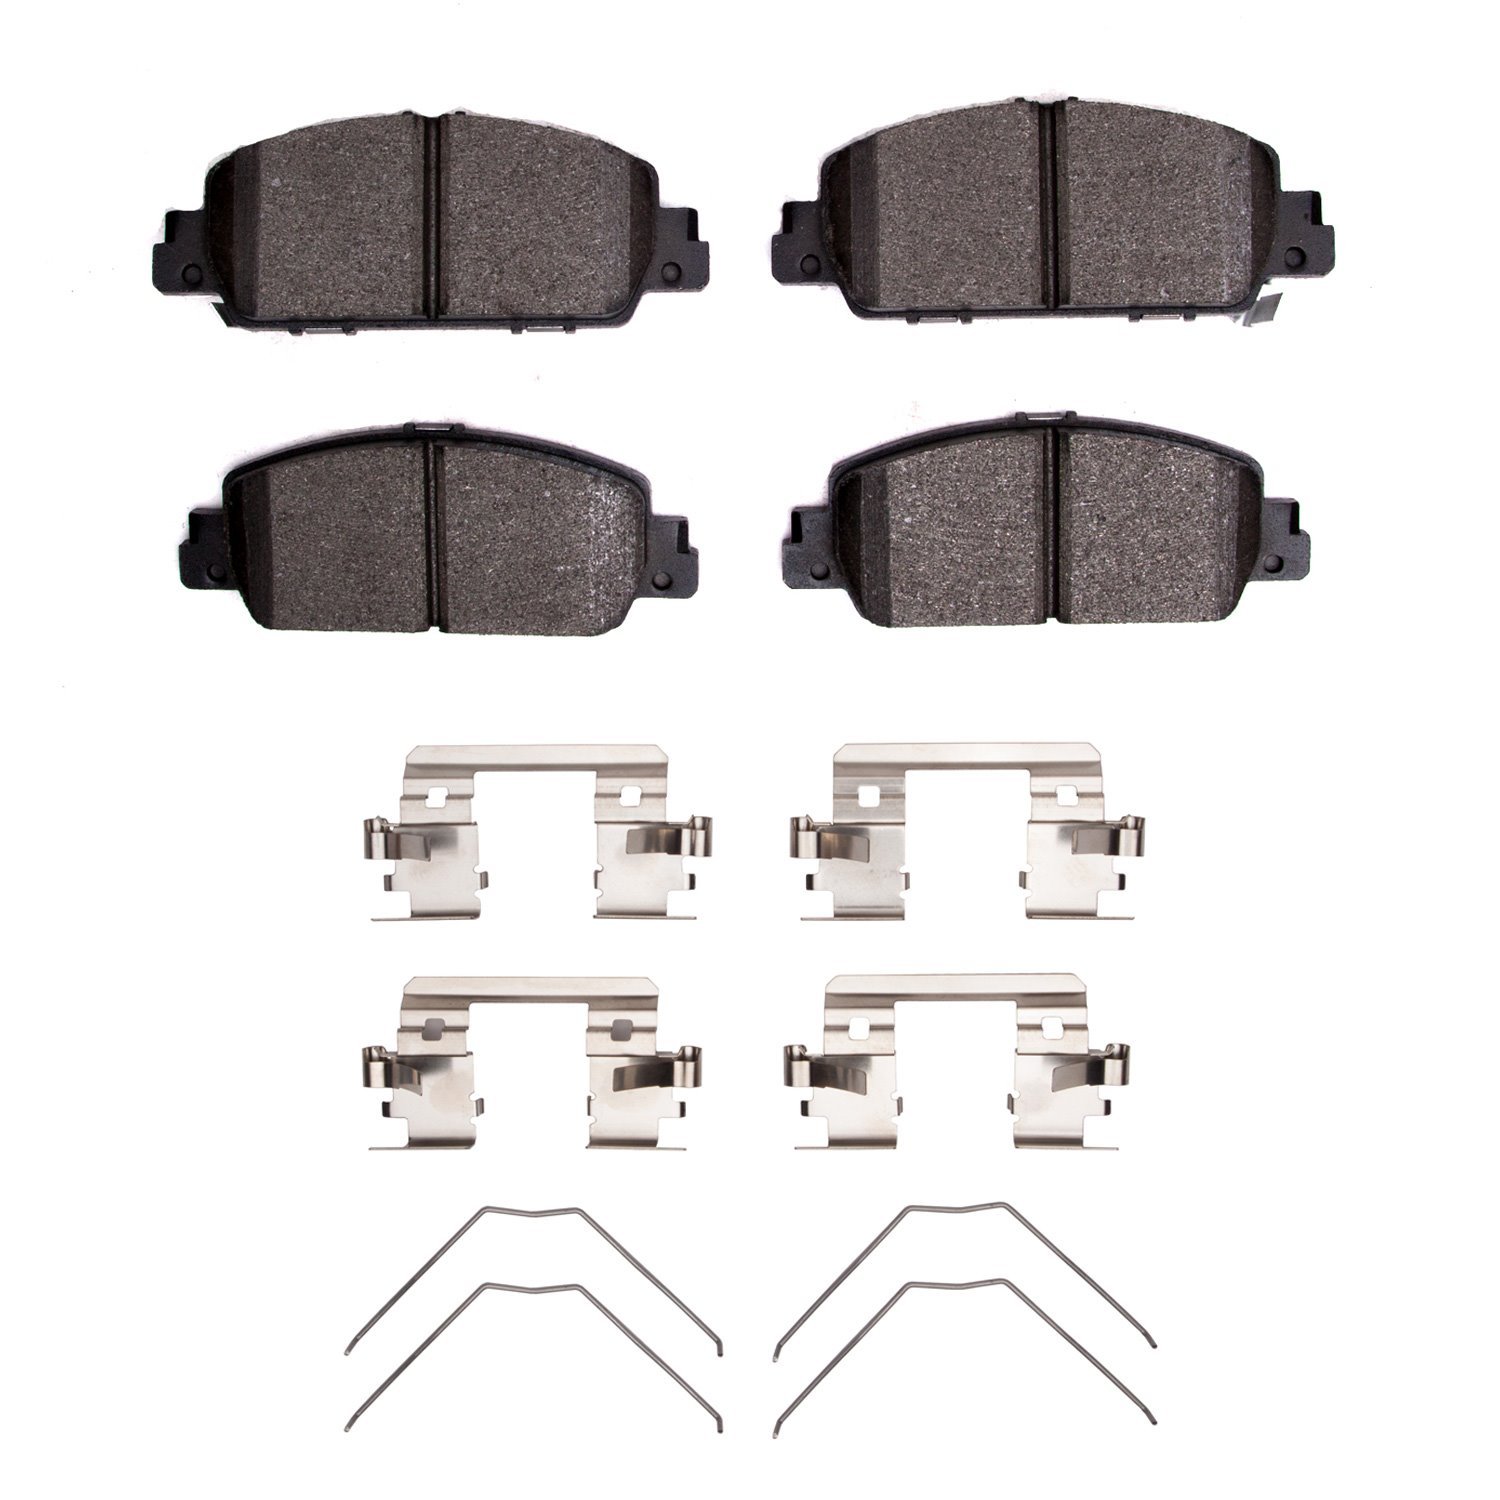 1310-1654-01 3000-Series Ceramic Brake Pads & Hardware Kit, Fits Select Acura/Honda, Position: Front